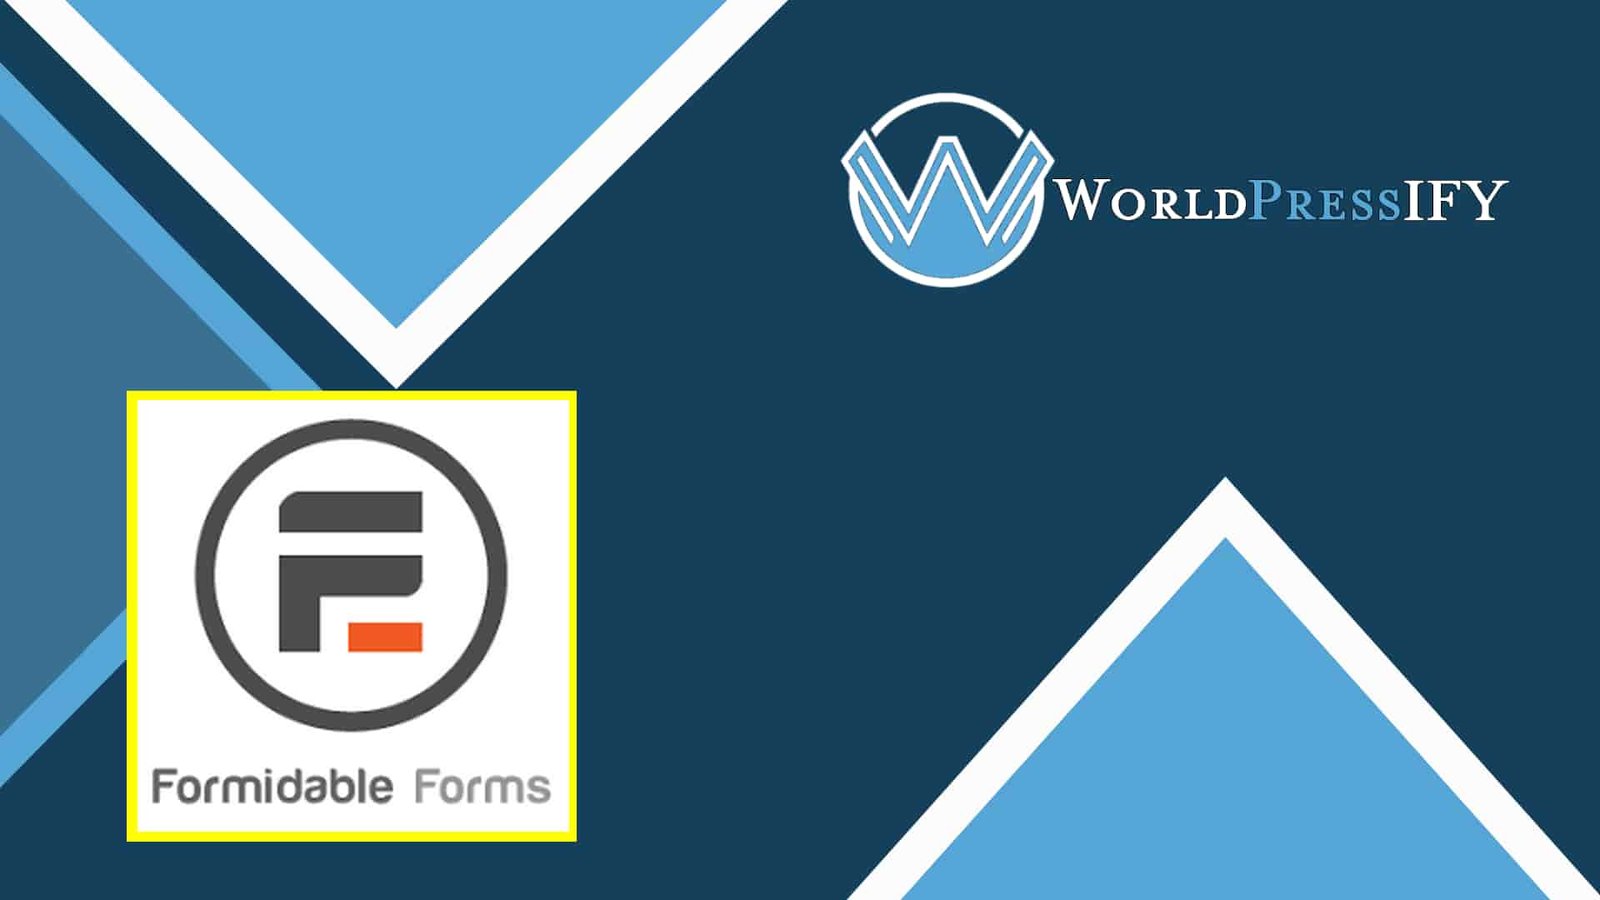 Formidable Forms – WPML Multilingual - WorldPress IFY